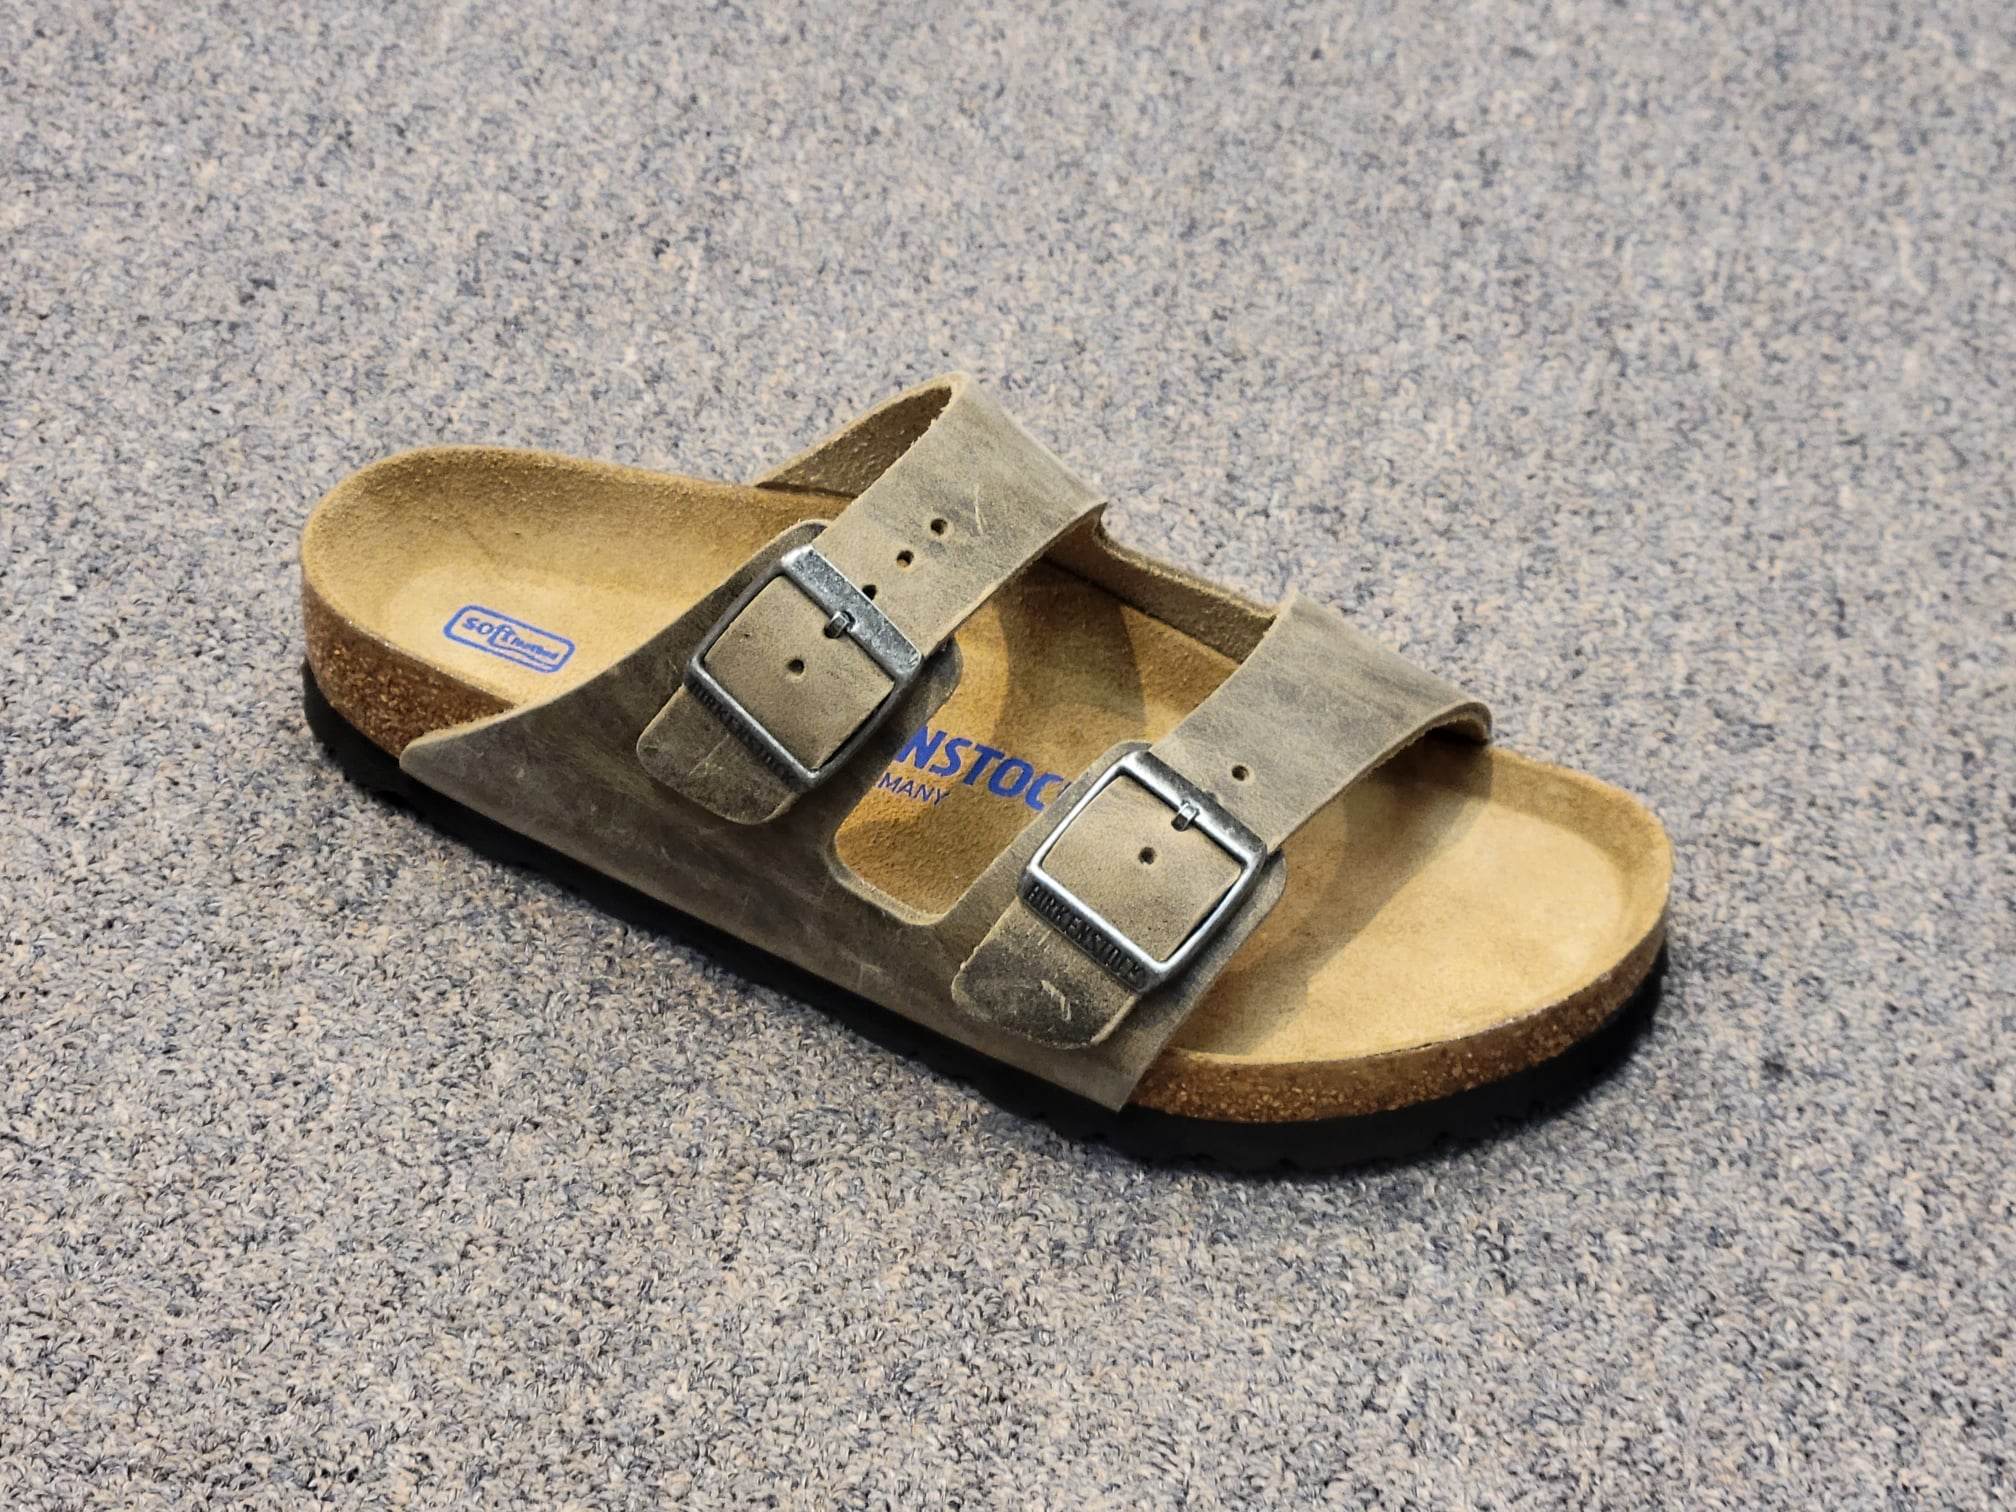 Arizona Soft Footbed Birkenstock Sandals